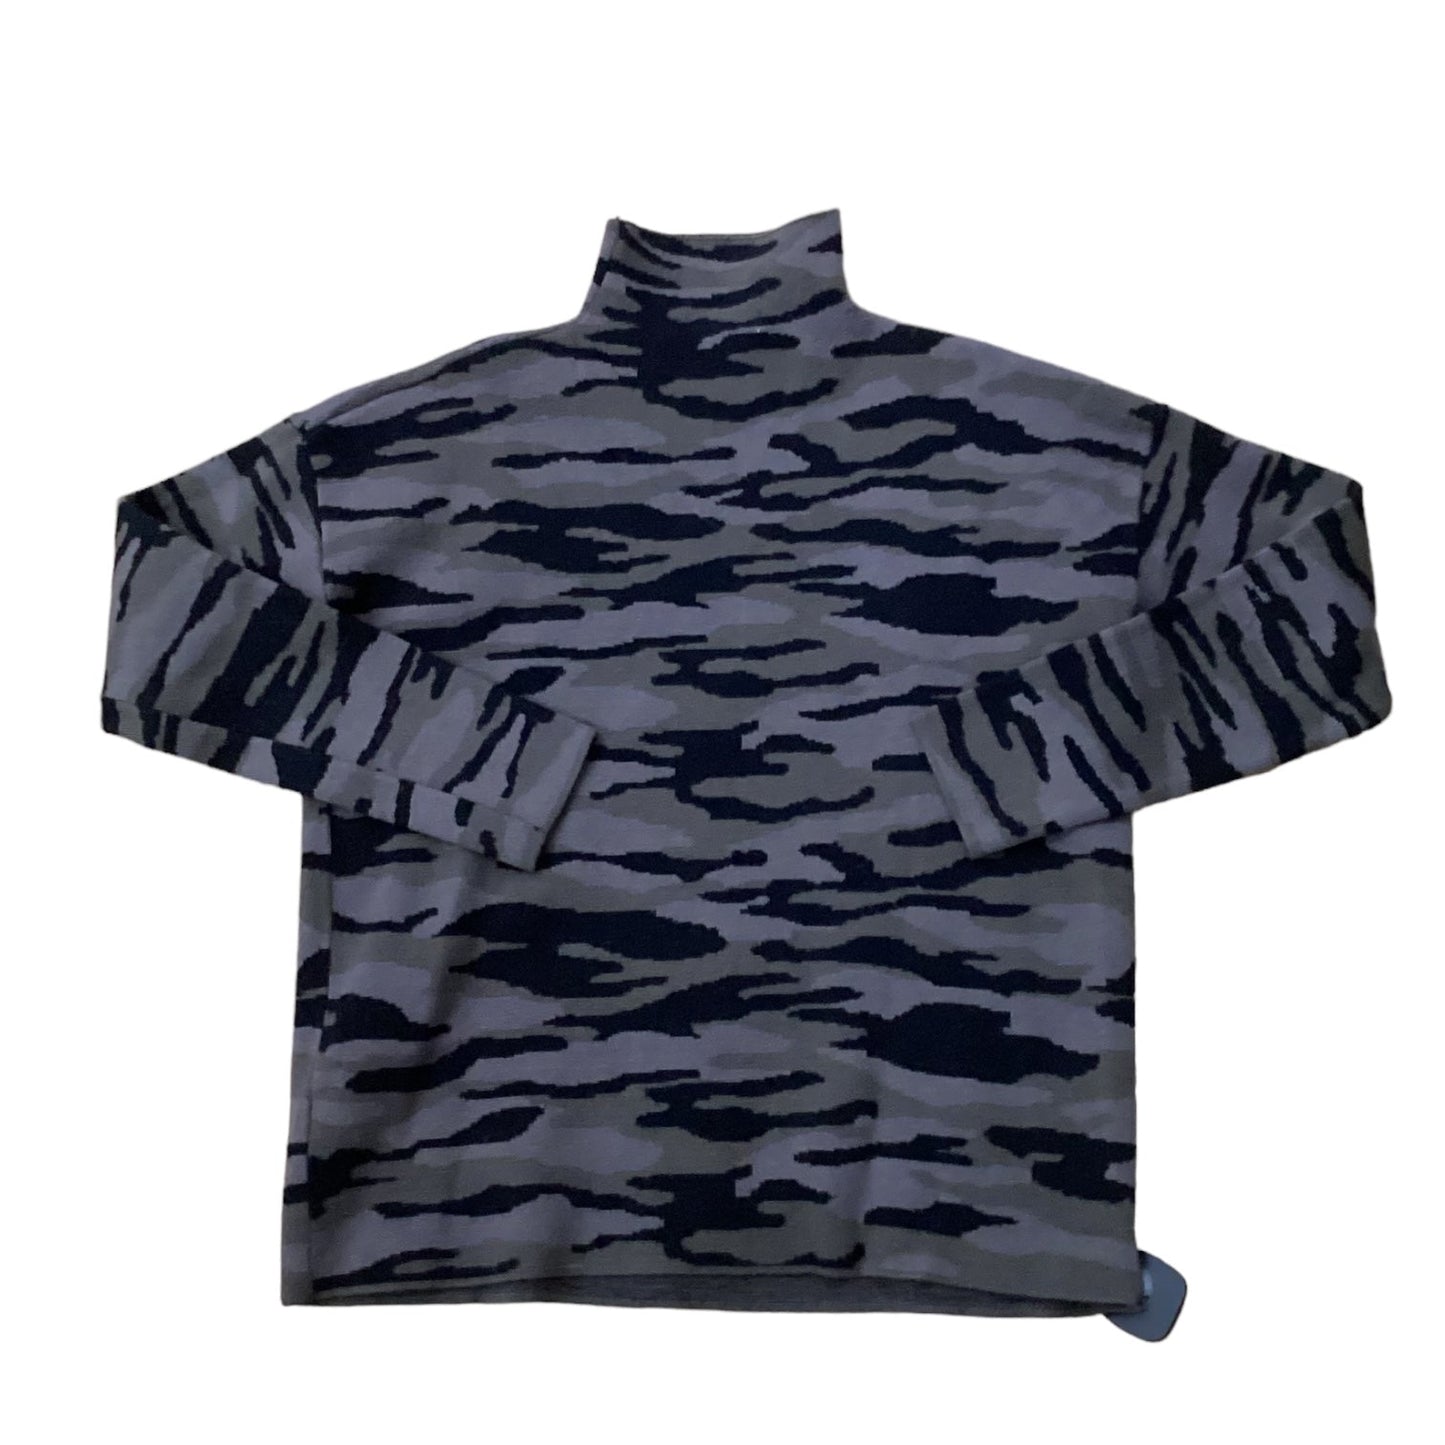 Camouflage Print Sweater T Tahari, Size S